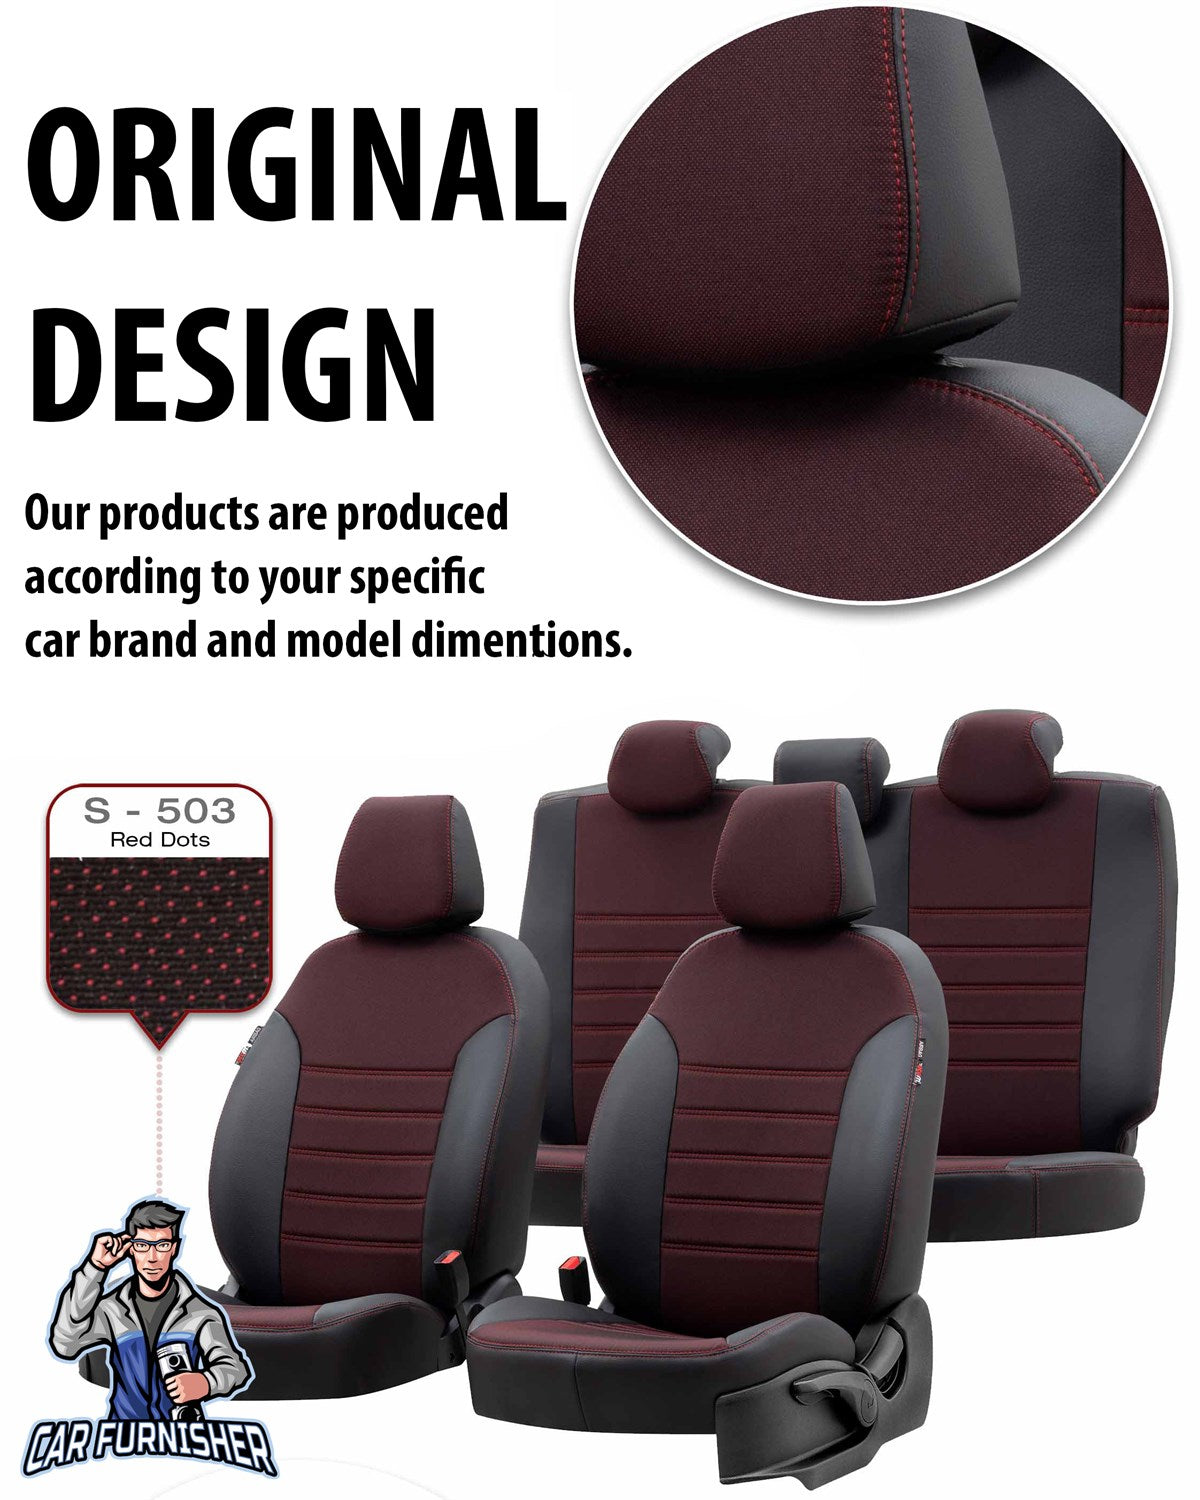 Toyota Carina Seat Cover Paris Leather & Jacquard Design Gray Leather & Jacquard Fabric